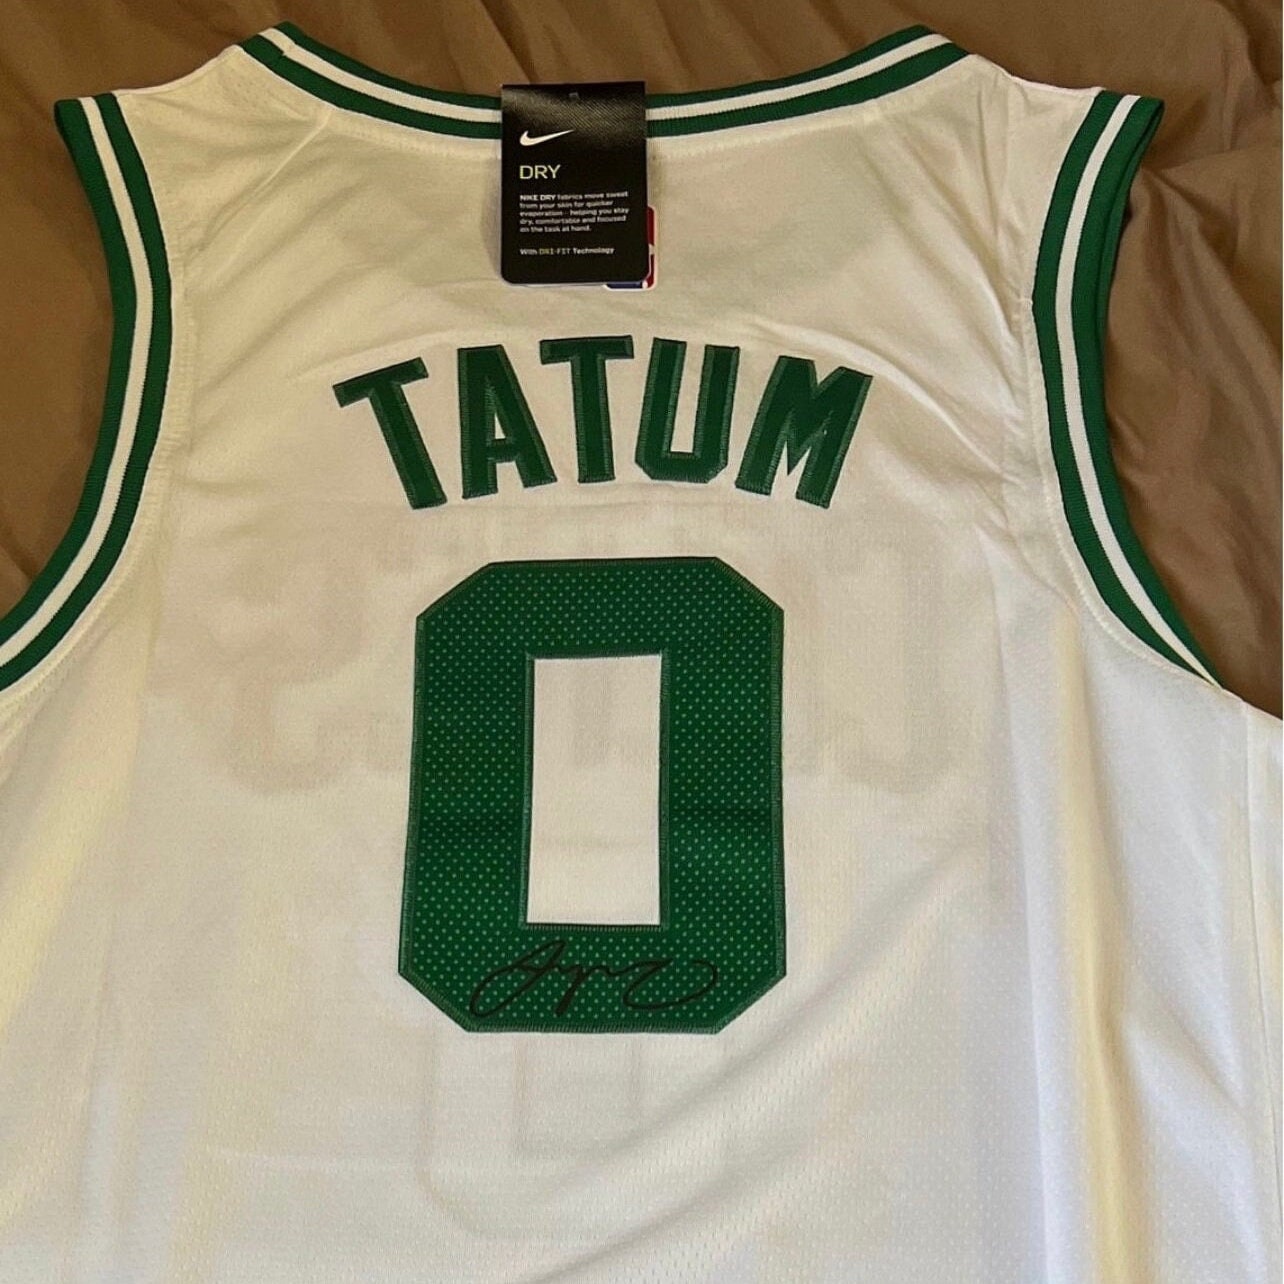 green tatum jersey